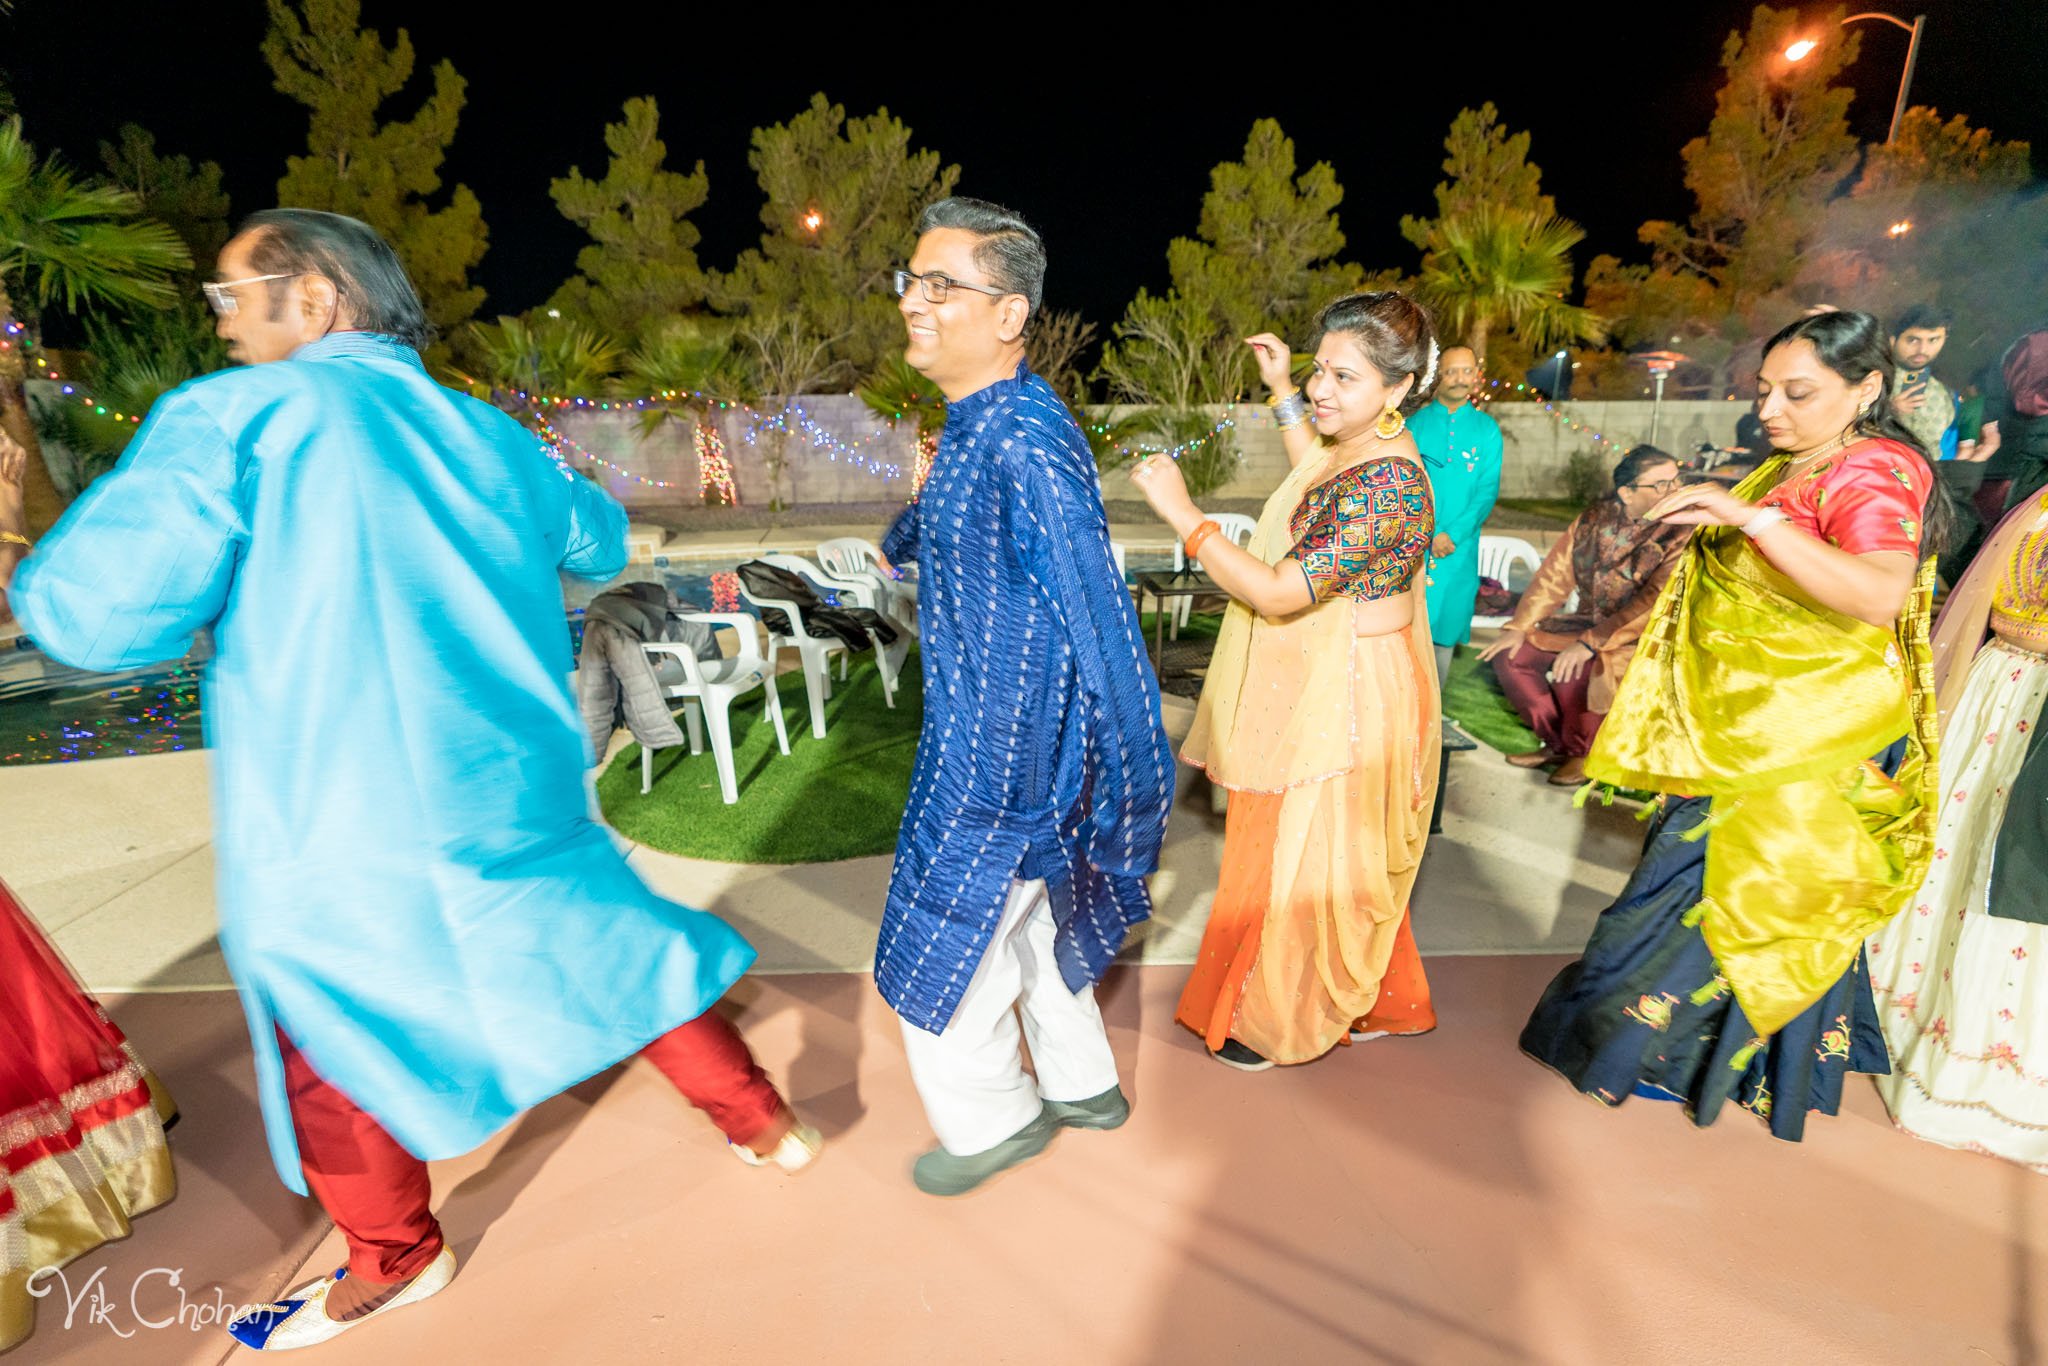 2022-02-04-Hely-&-Parth-Garba-Night-Indian-Wedding-Vik-Chohan-Photography-Photo-Booth-Social-Media-VCP-077.jpg